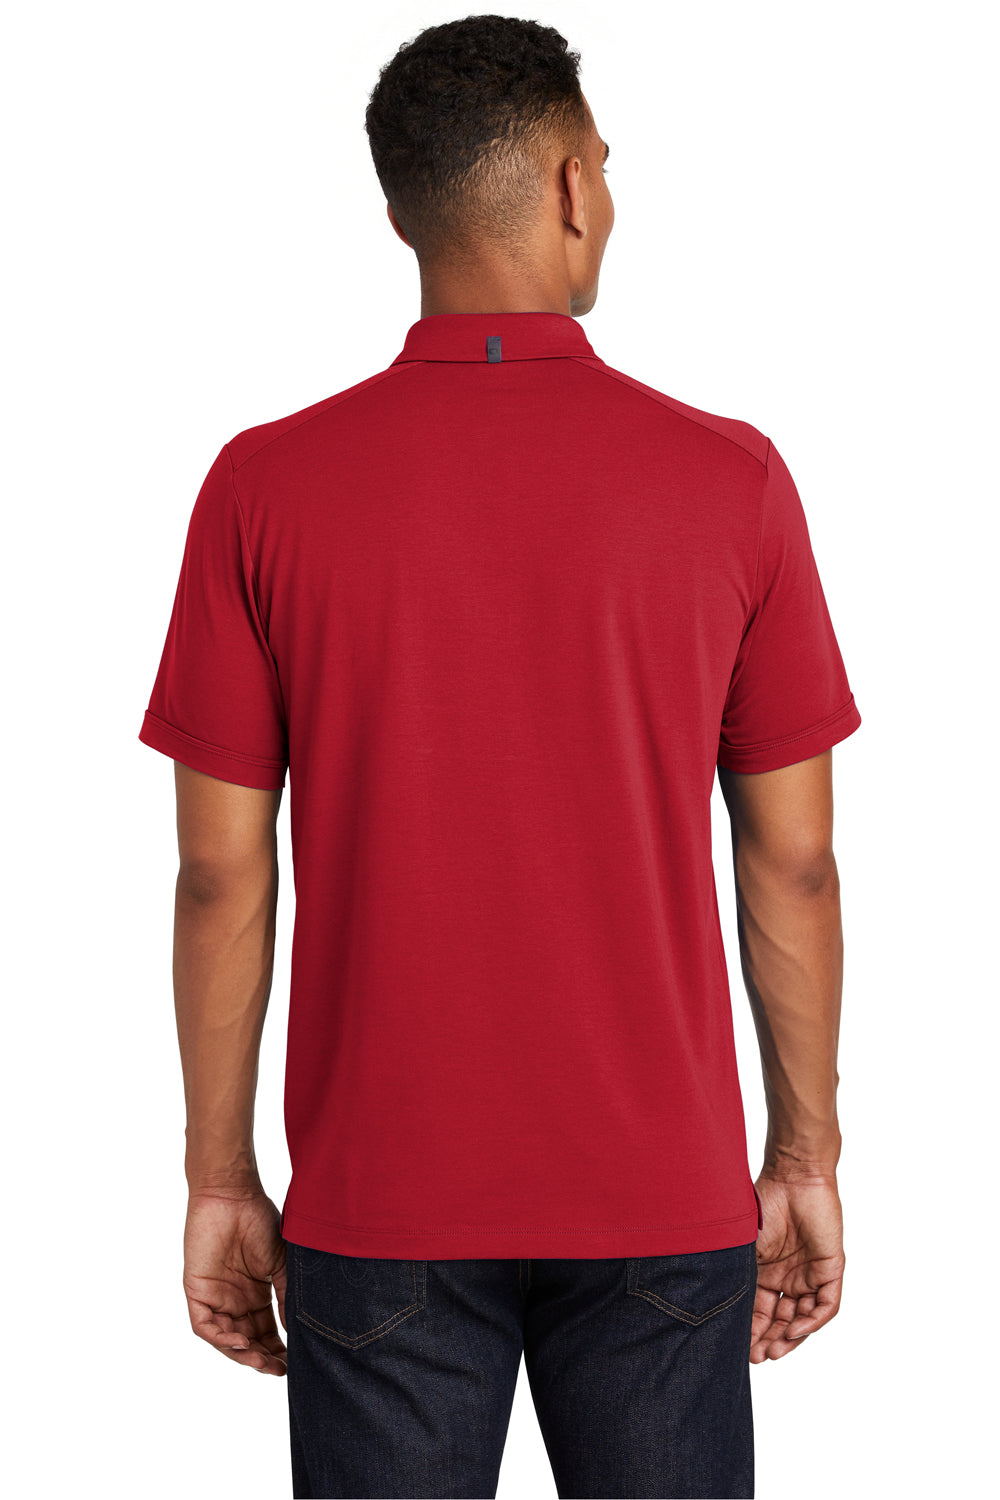 Ogio OG138 Mens Limit Moisture Wicking Short Sleeve Polo Shirt Red Back